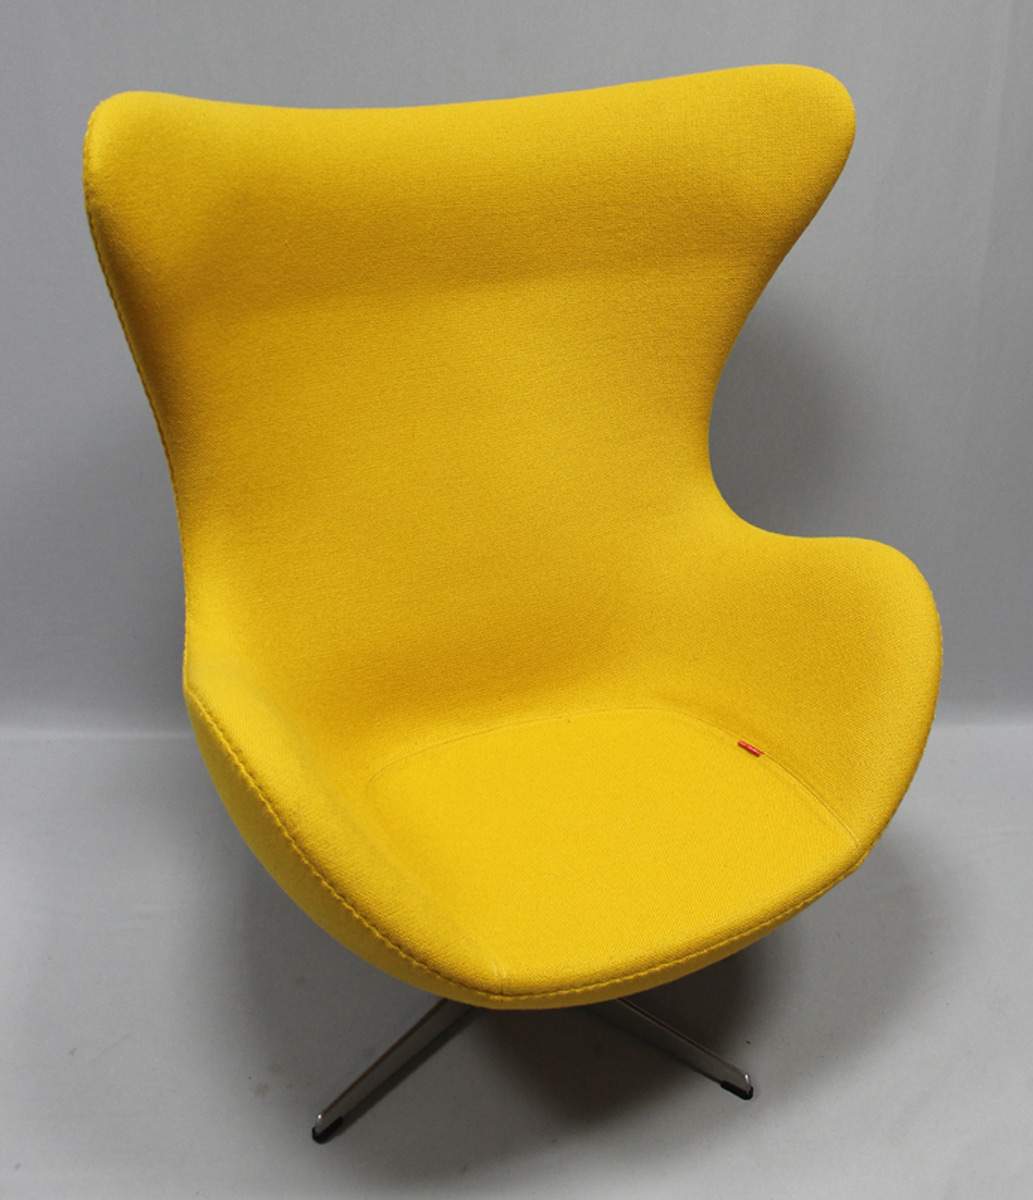 Jacobsen, Arne (1902-1971)The "Egg Chair" (Das Ei), Modell 3316. Fußkreuz aus Aluminium, drehbarer - Image 3 of 4